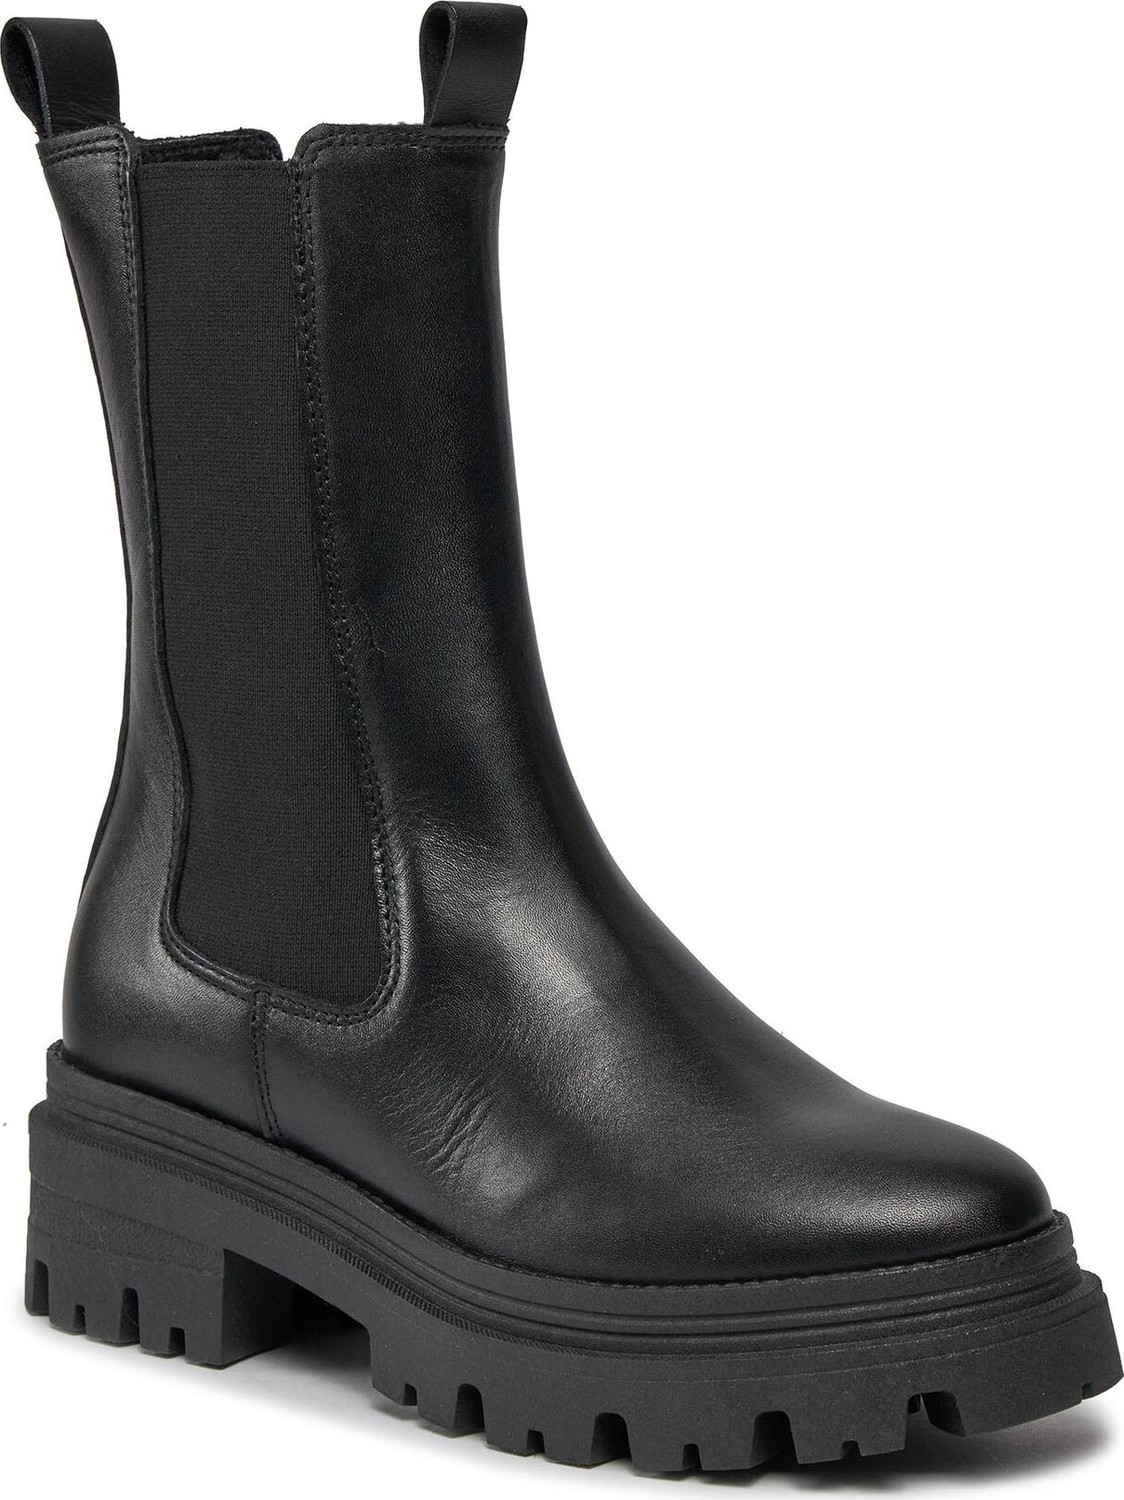 Kotníková obuv s elastickým prvkem Tamaris 1-25498-41 Black Leather 003